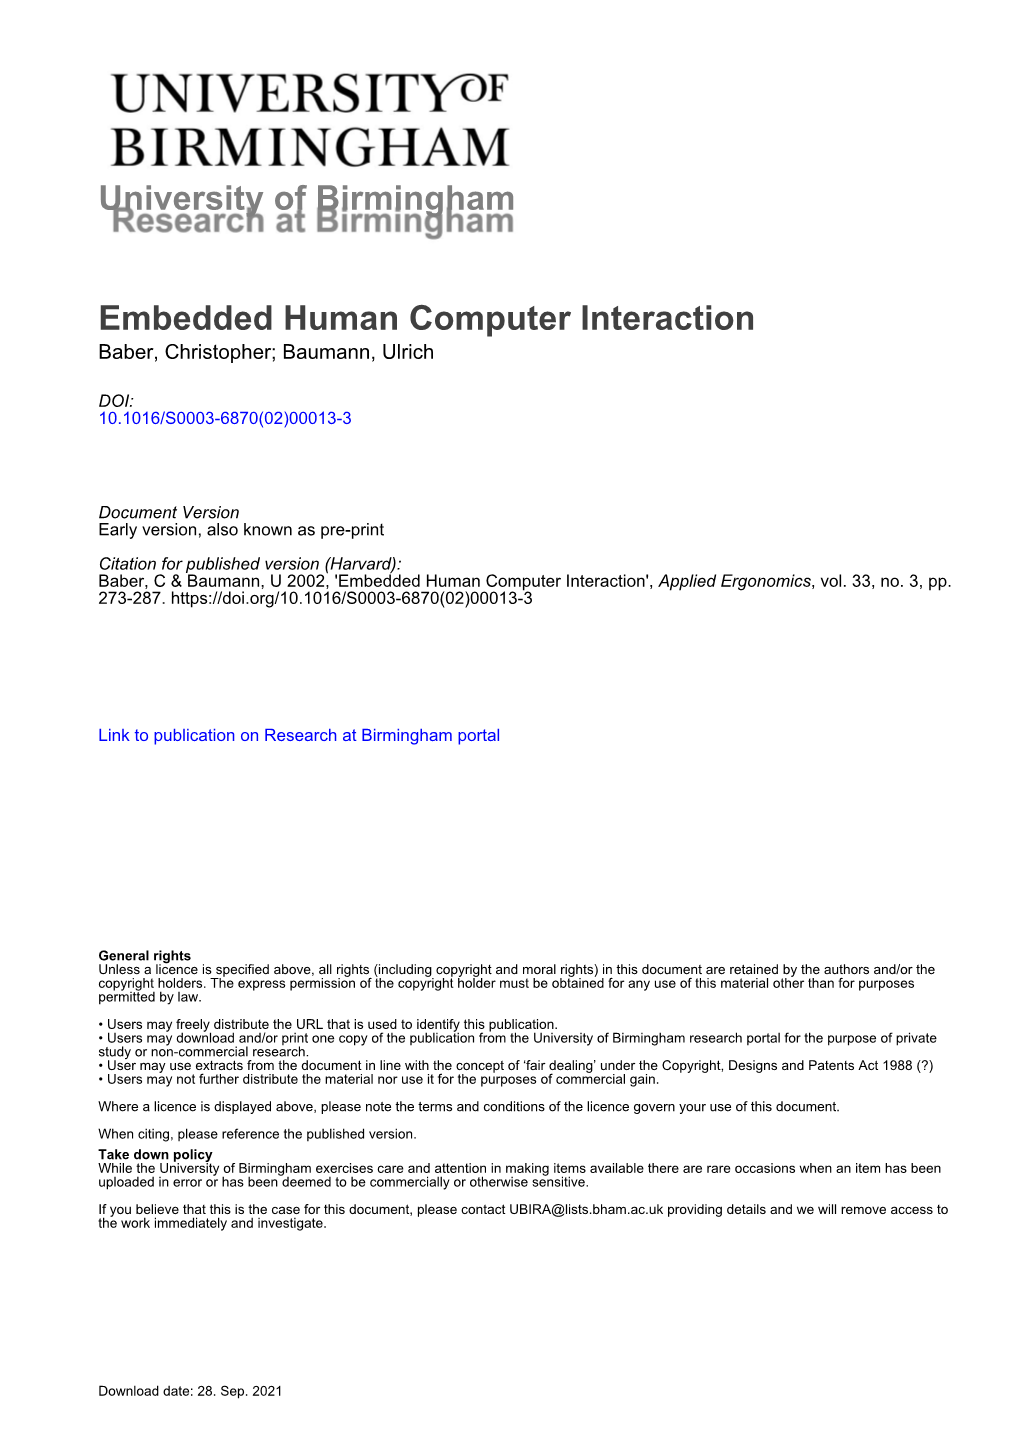 University of Birmingham Embedded Human Computer Interaction